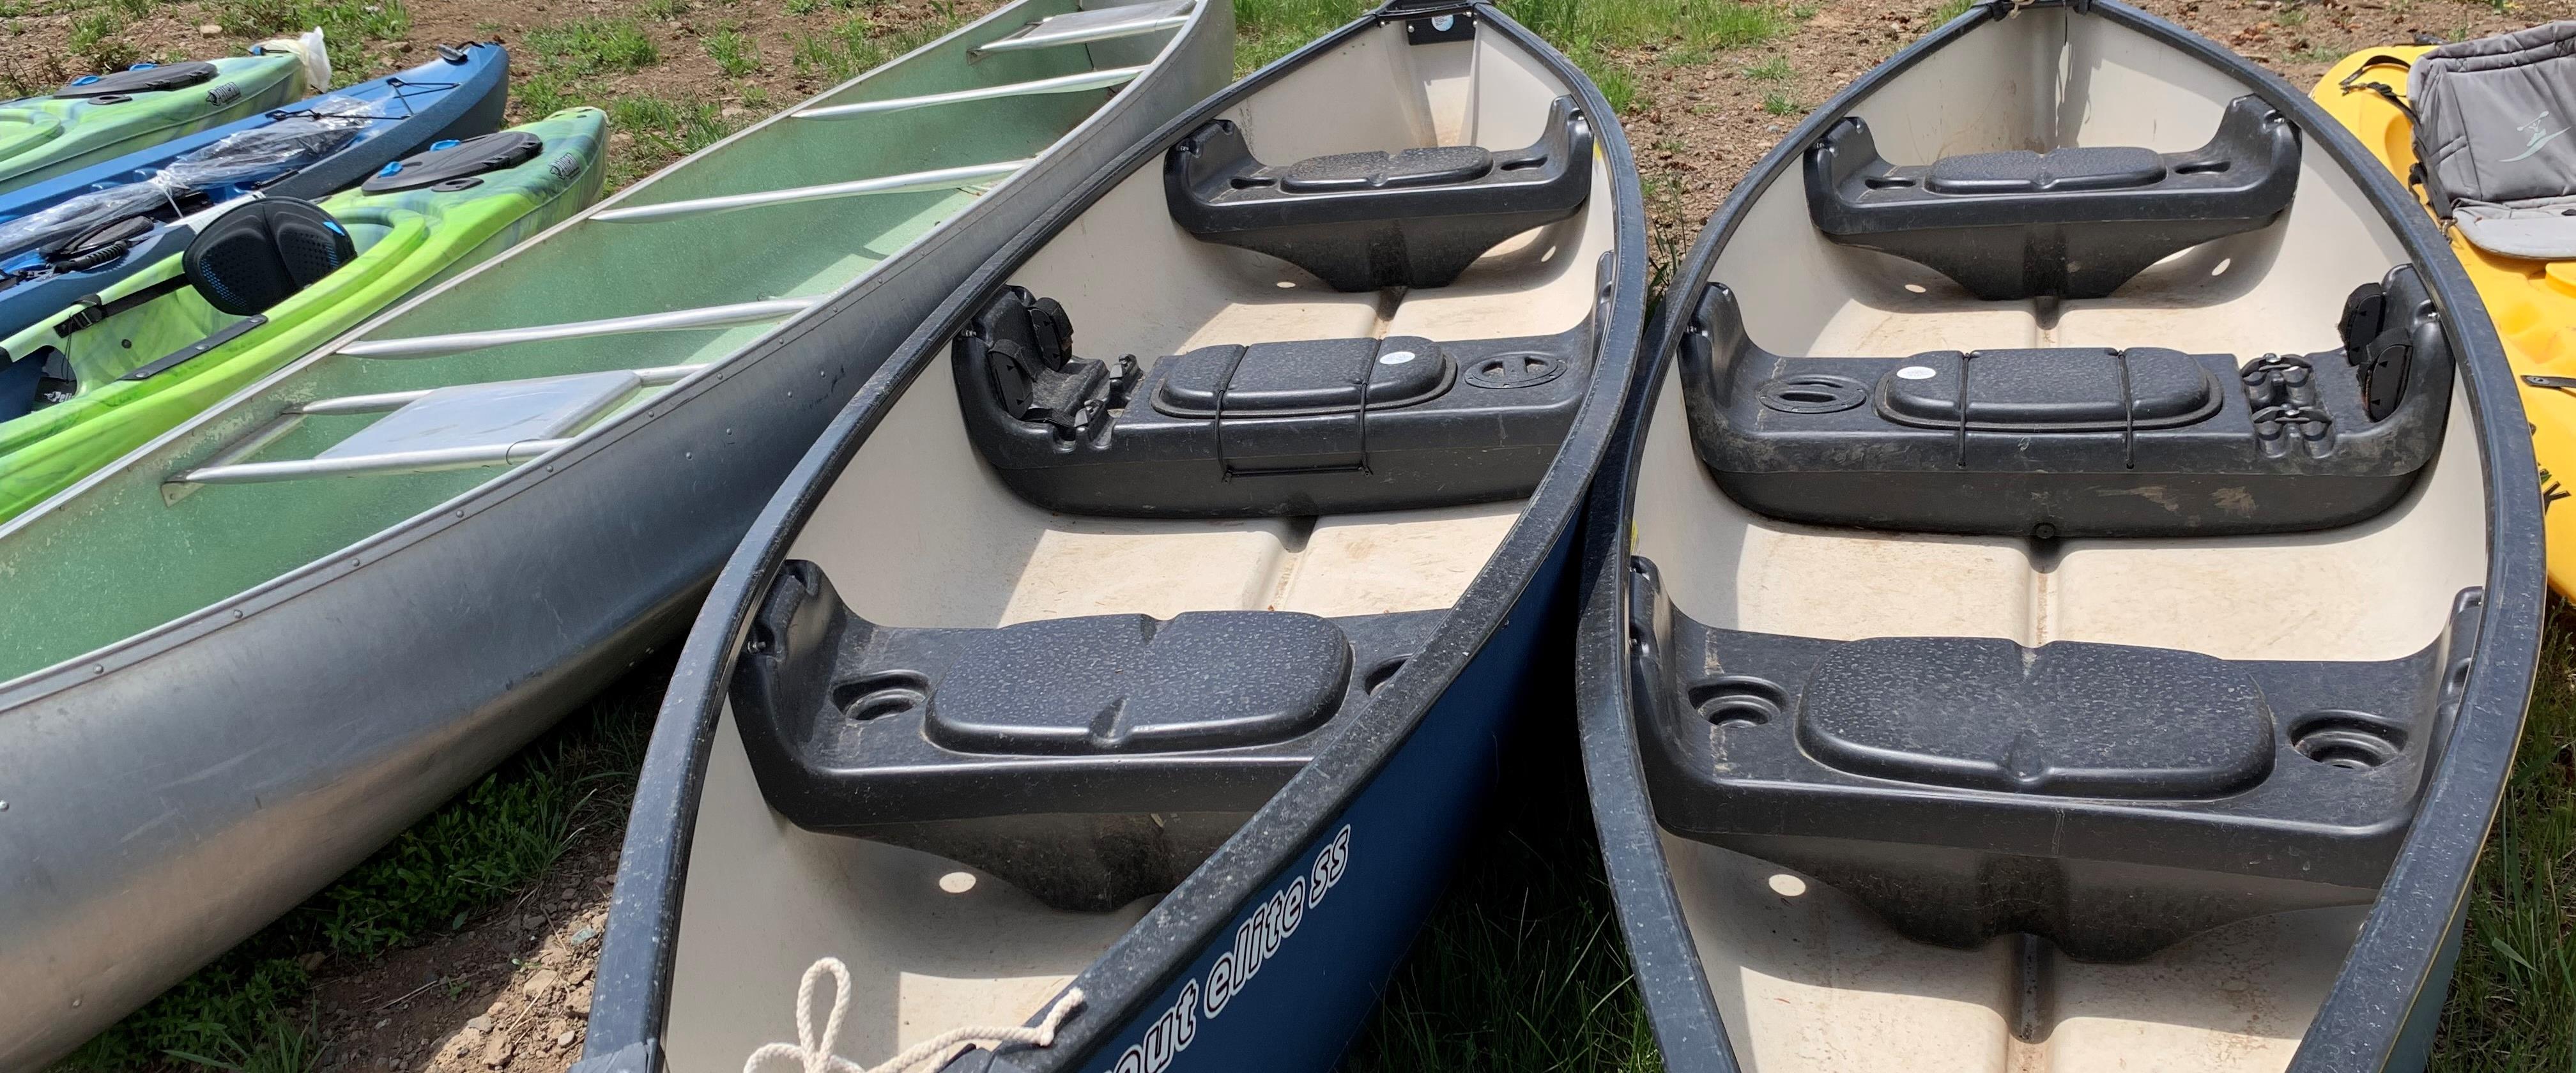 1 Hour Kayak/Canoe Rental